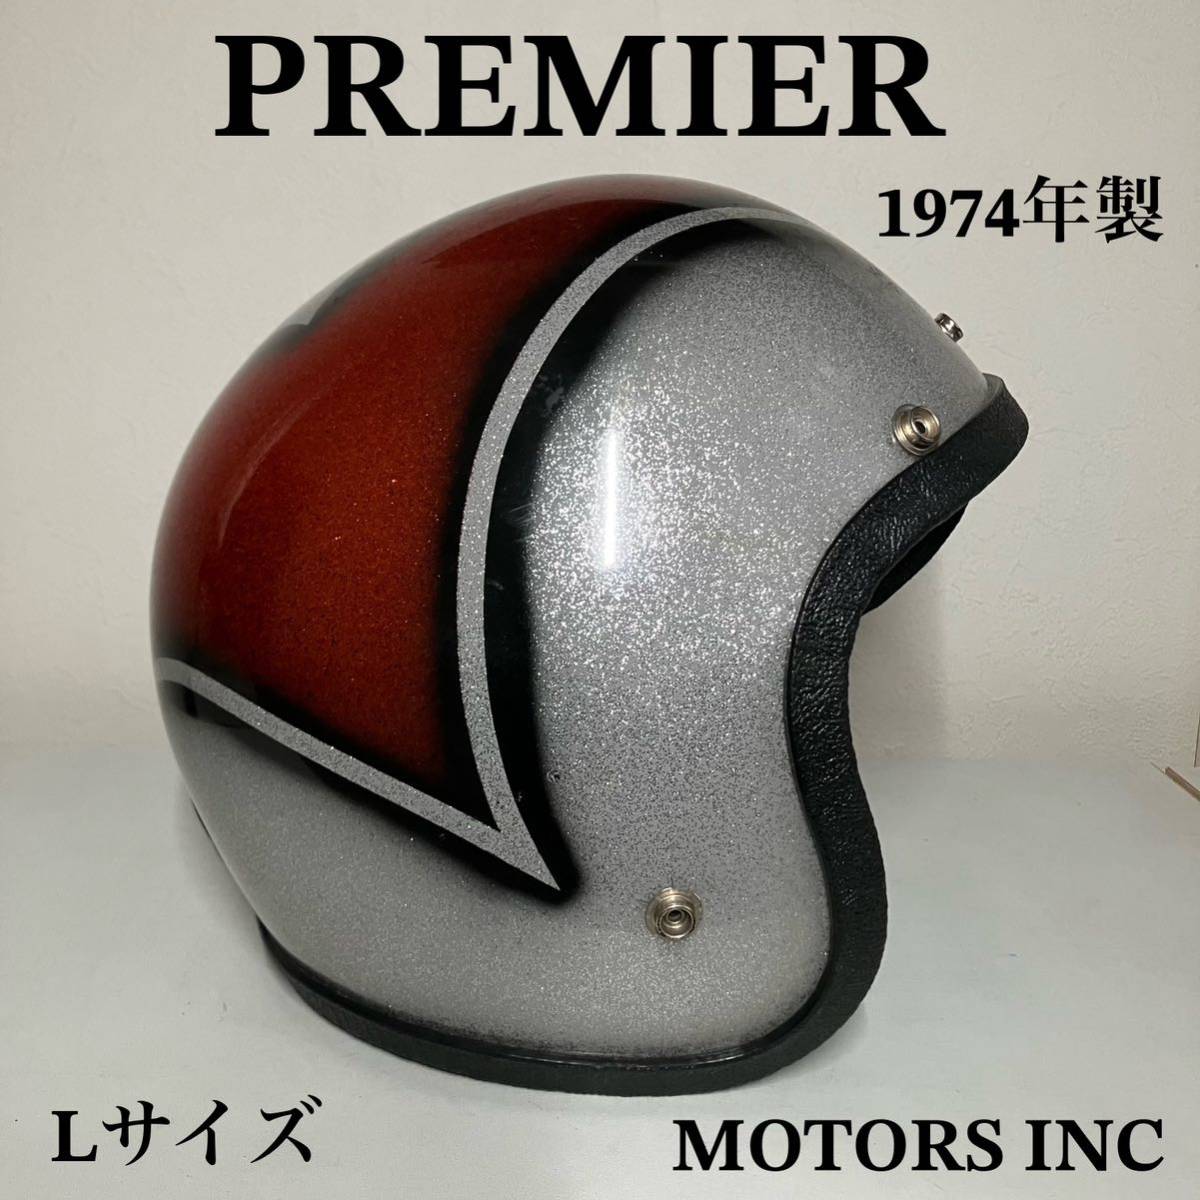 Premier ★ Vintage Helme 1974 Metal Flakes Silver Red Harley Old Car Buco.bell.